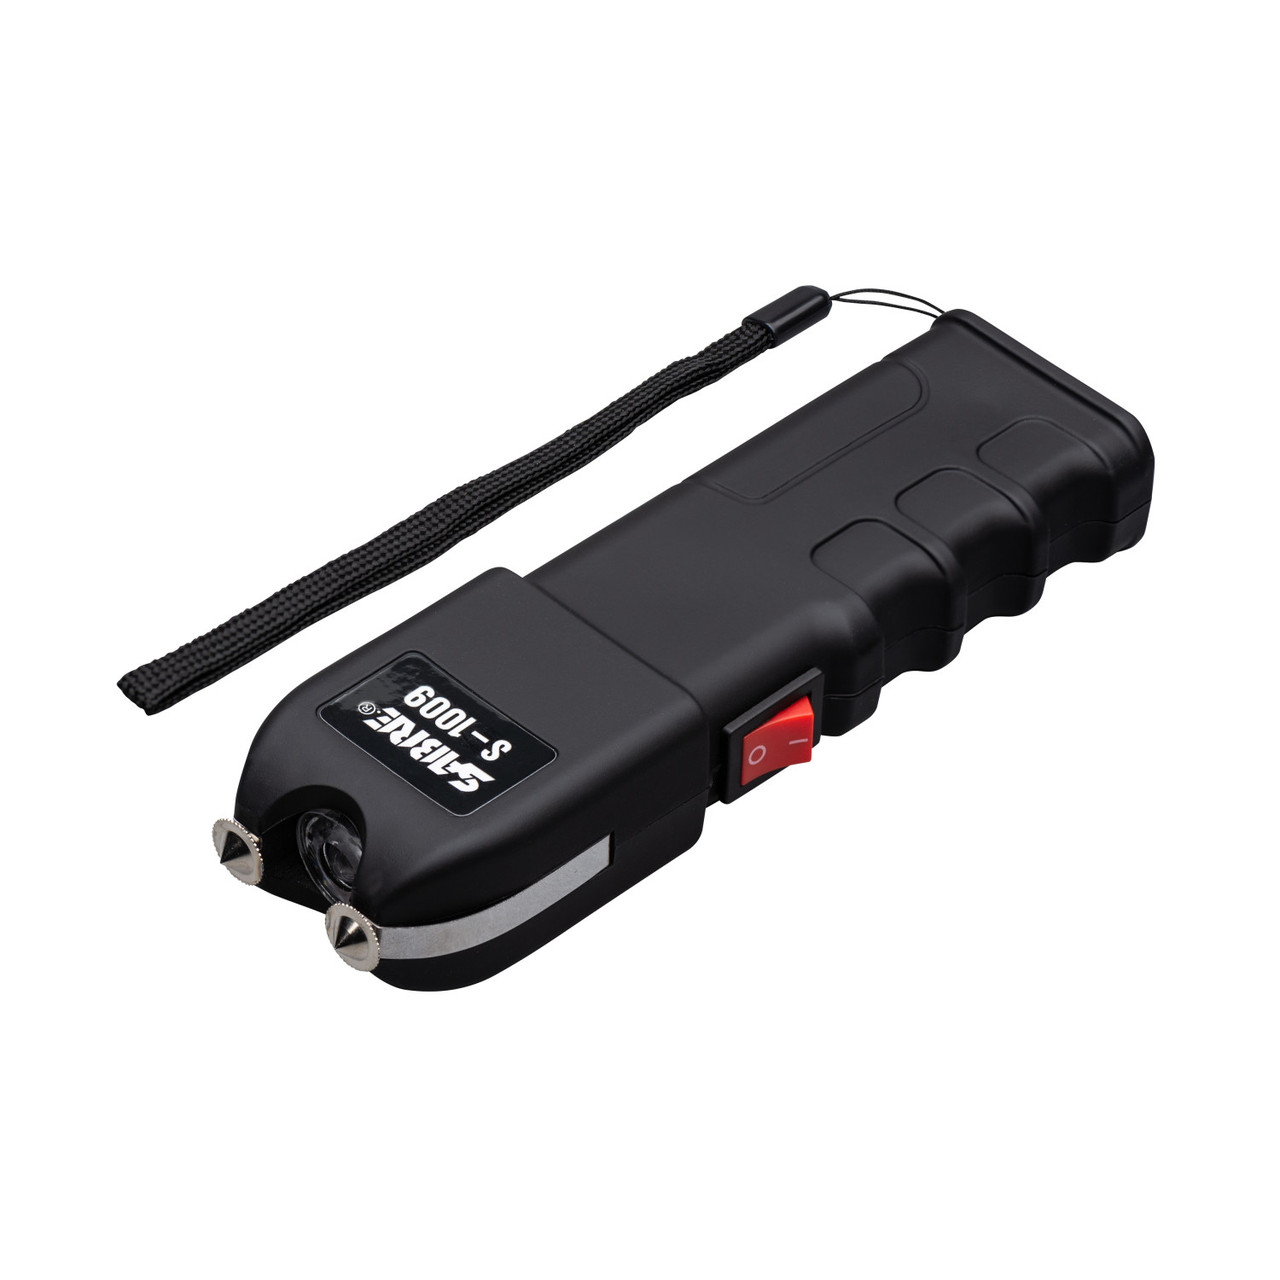 Stun Gun with Flashlight and Anti-Grab Bar Technology